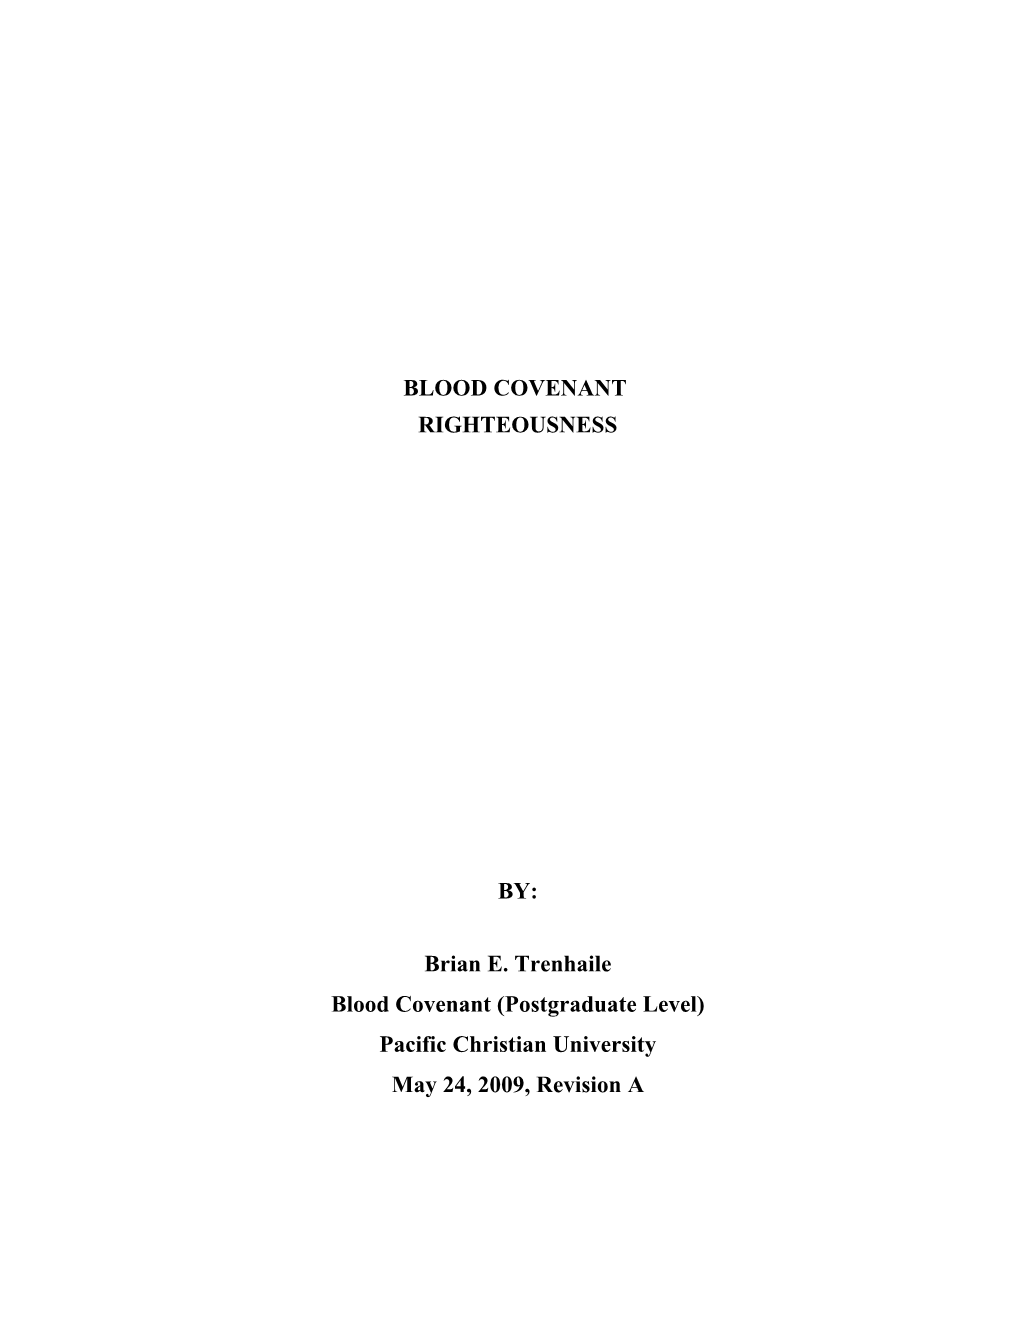 Brian E. Trenhaile Blood Covenant (Postgraduate Level) Pacificchristianuniversity